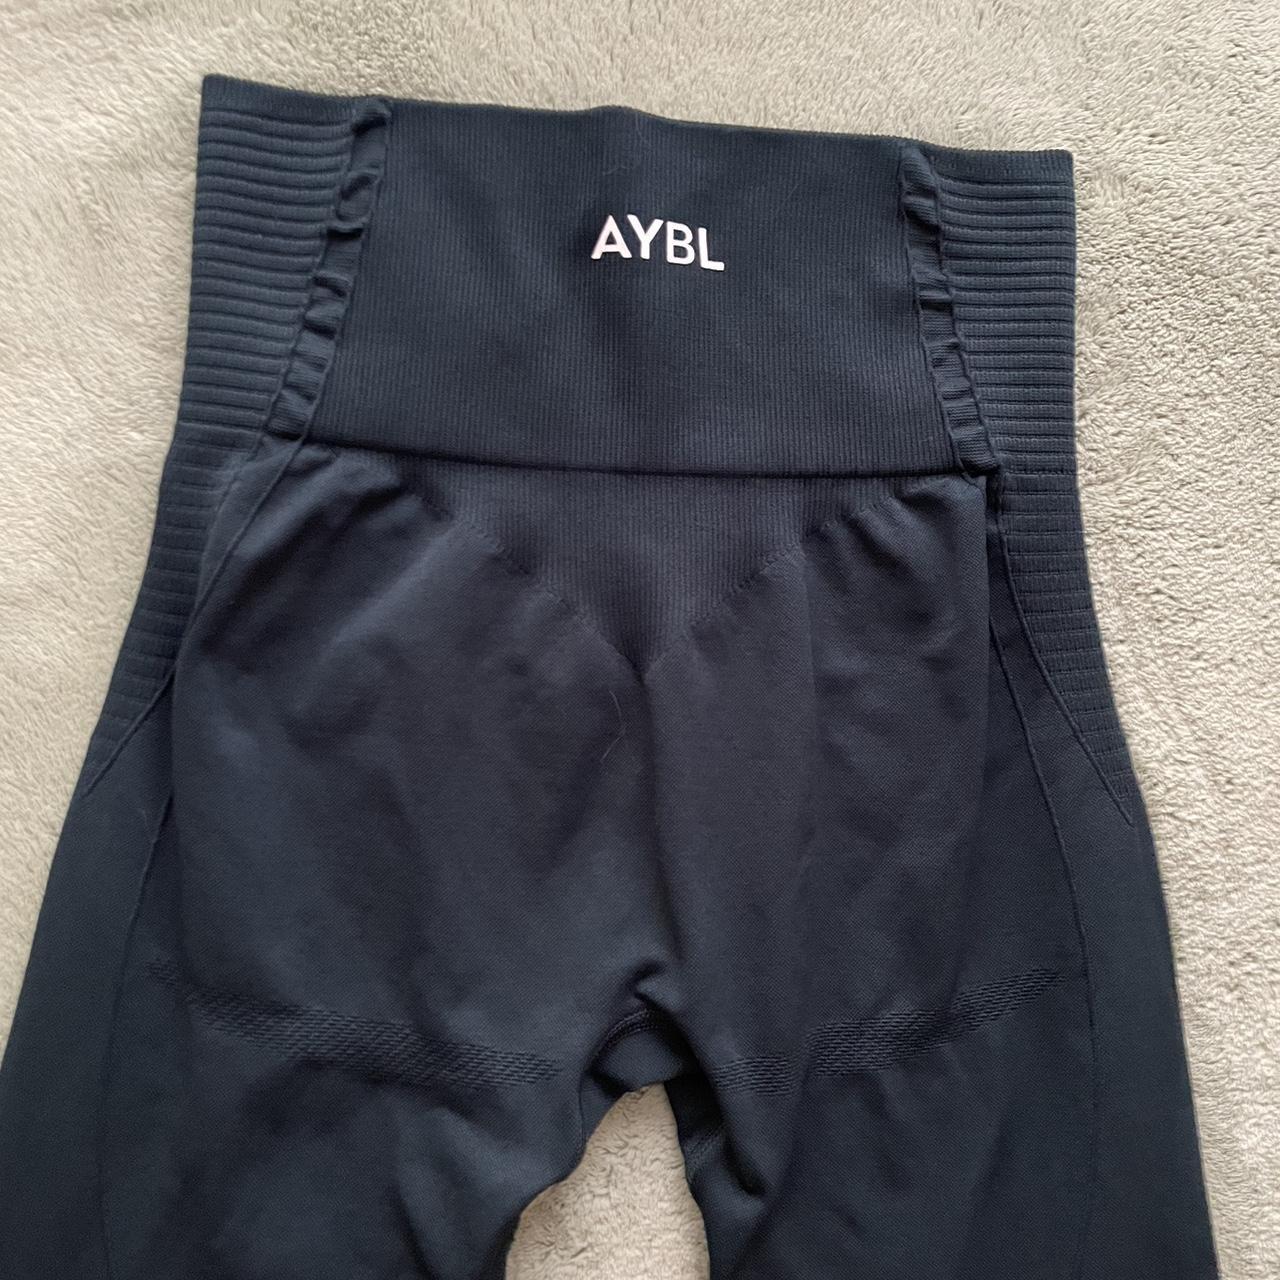 Black aybl leggings size small - Depop